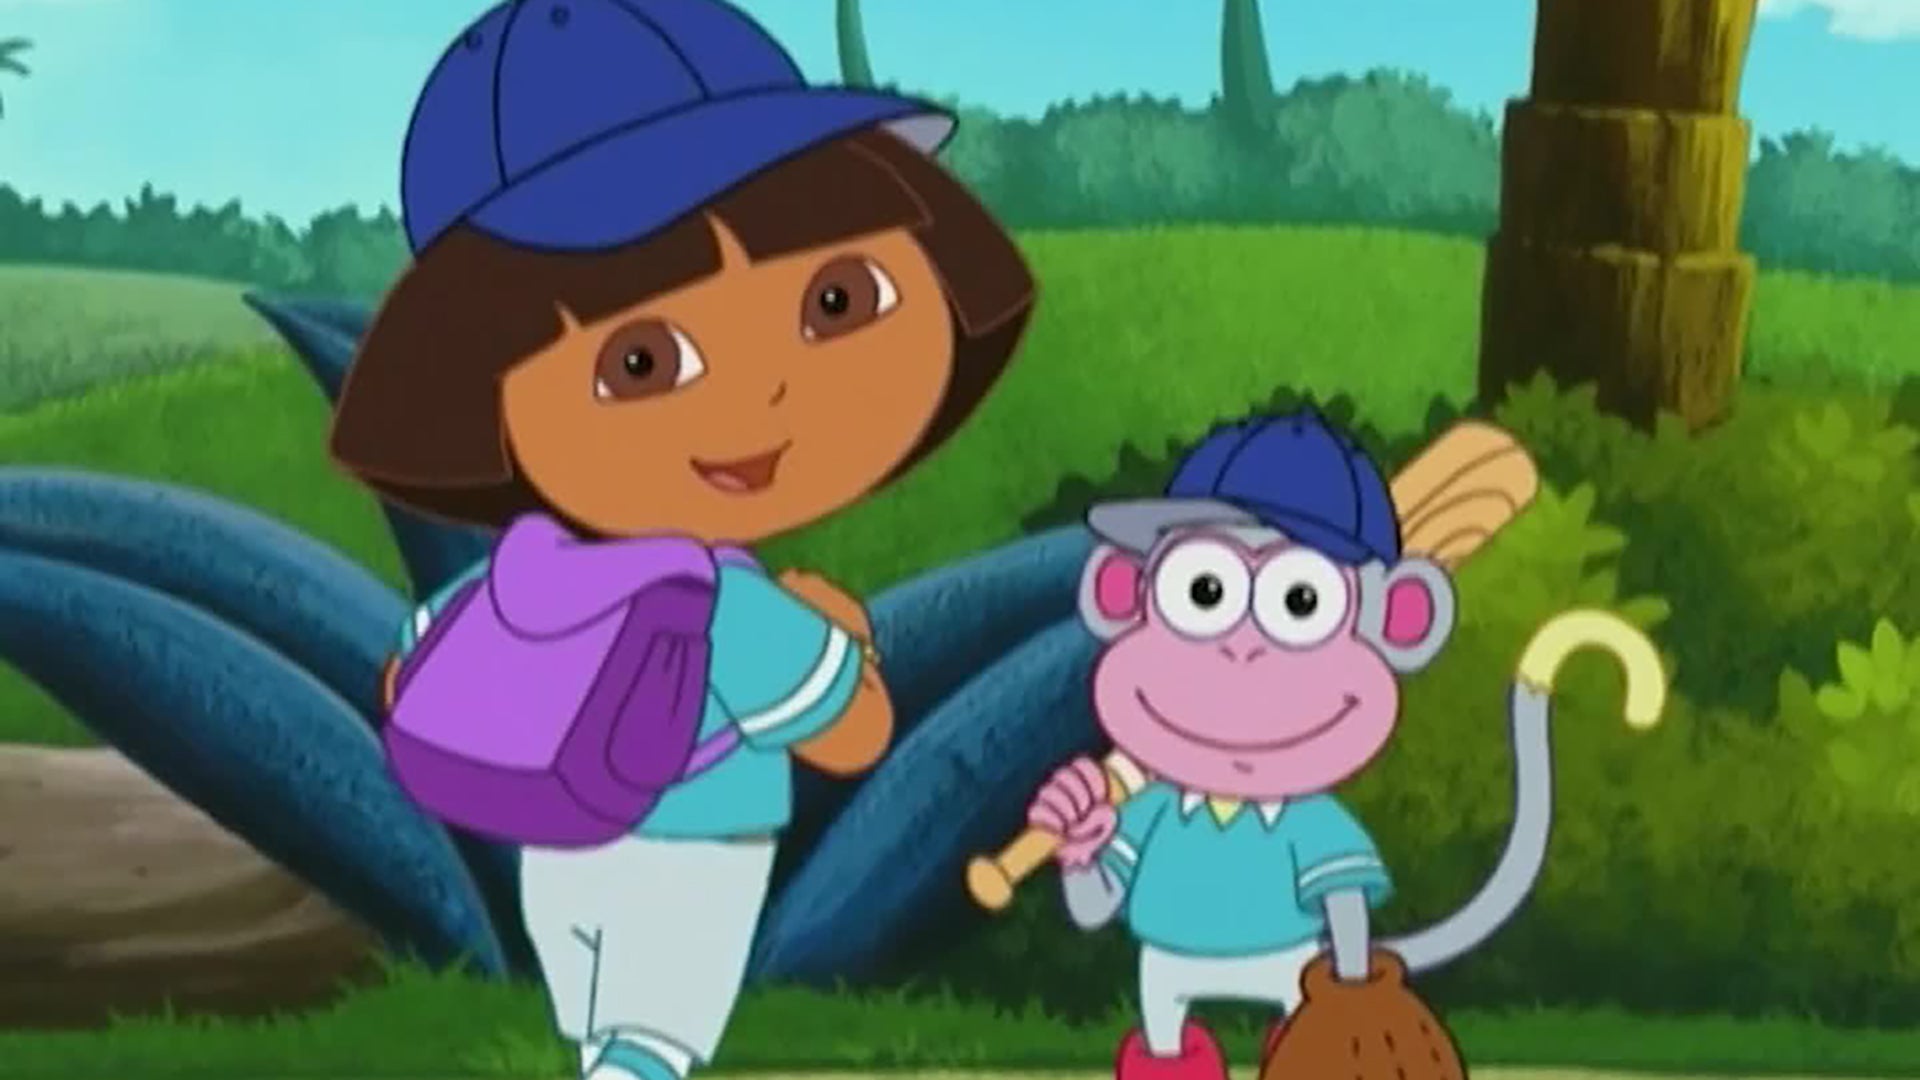 Dora The Explorer TV Show: Watch All Seasons, Full Episodes & Videos Online  In HD Quality On JioCinema